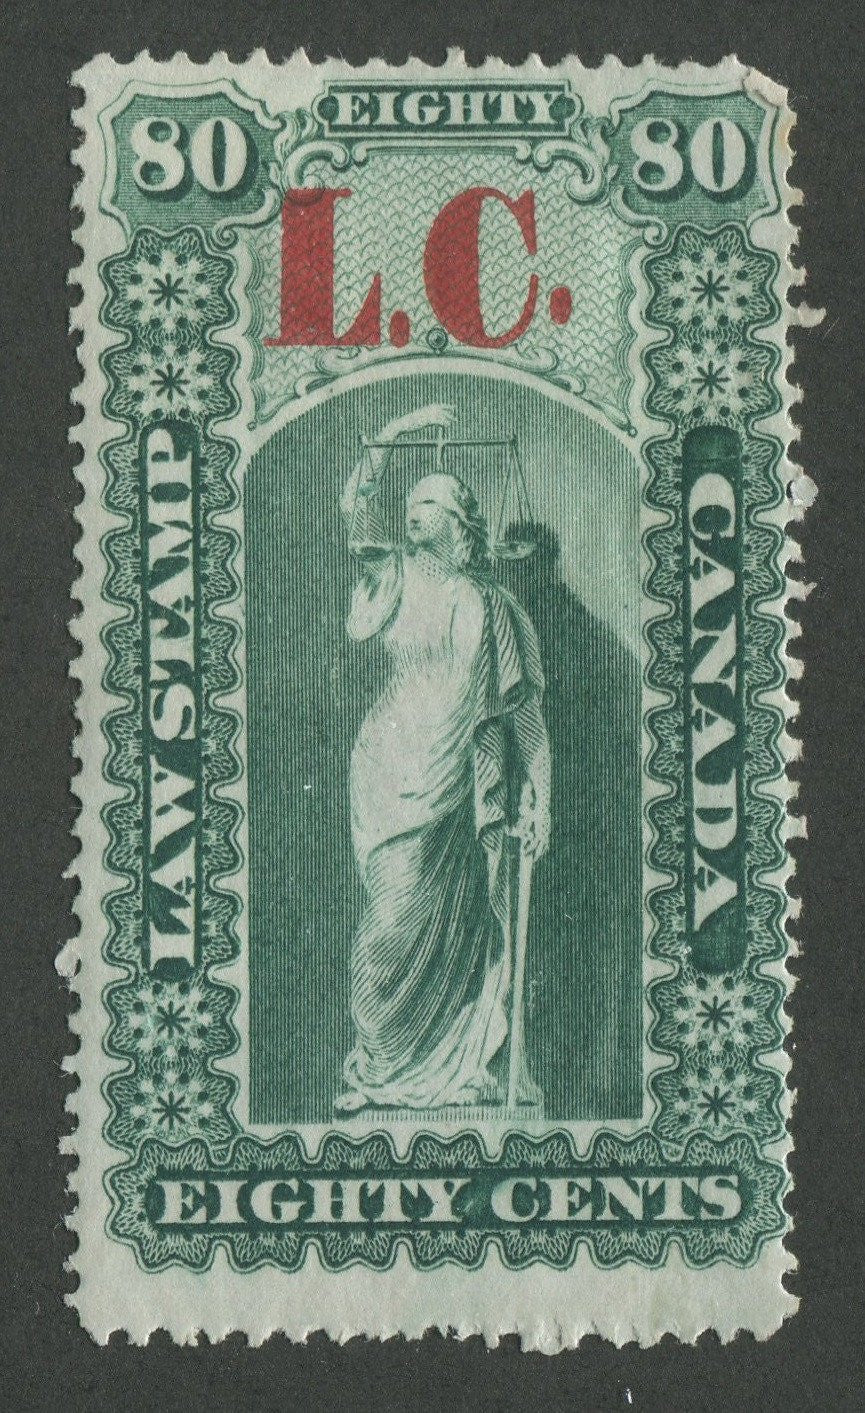 0008QL1707 - QL8 - Mint - UNLISTED - Deveney Stamps Ltd. Canadian Stamps